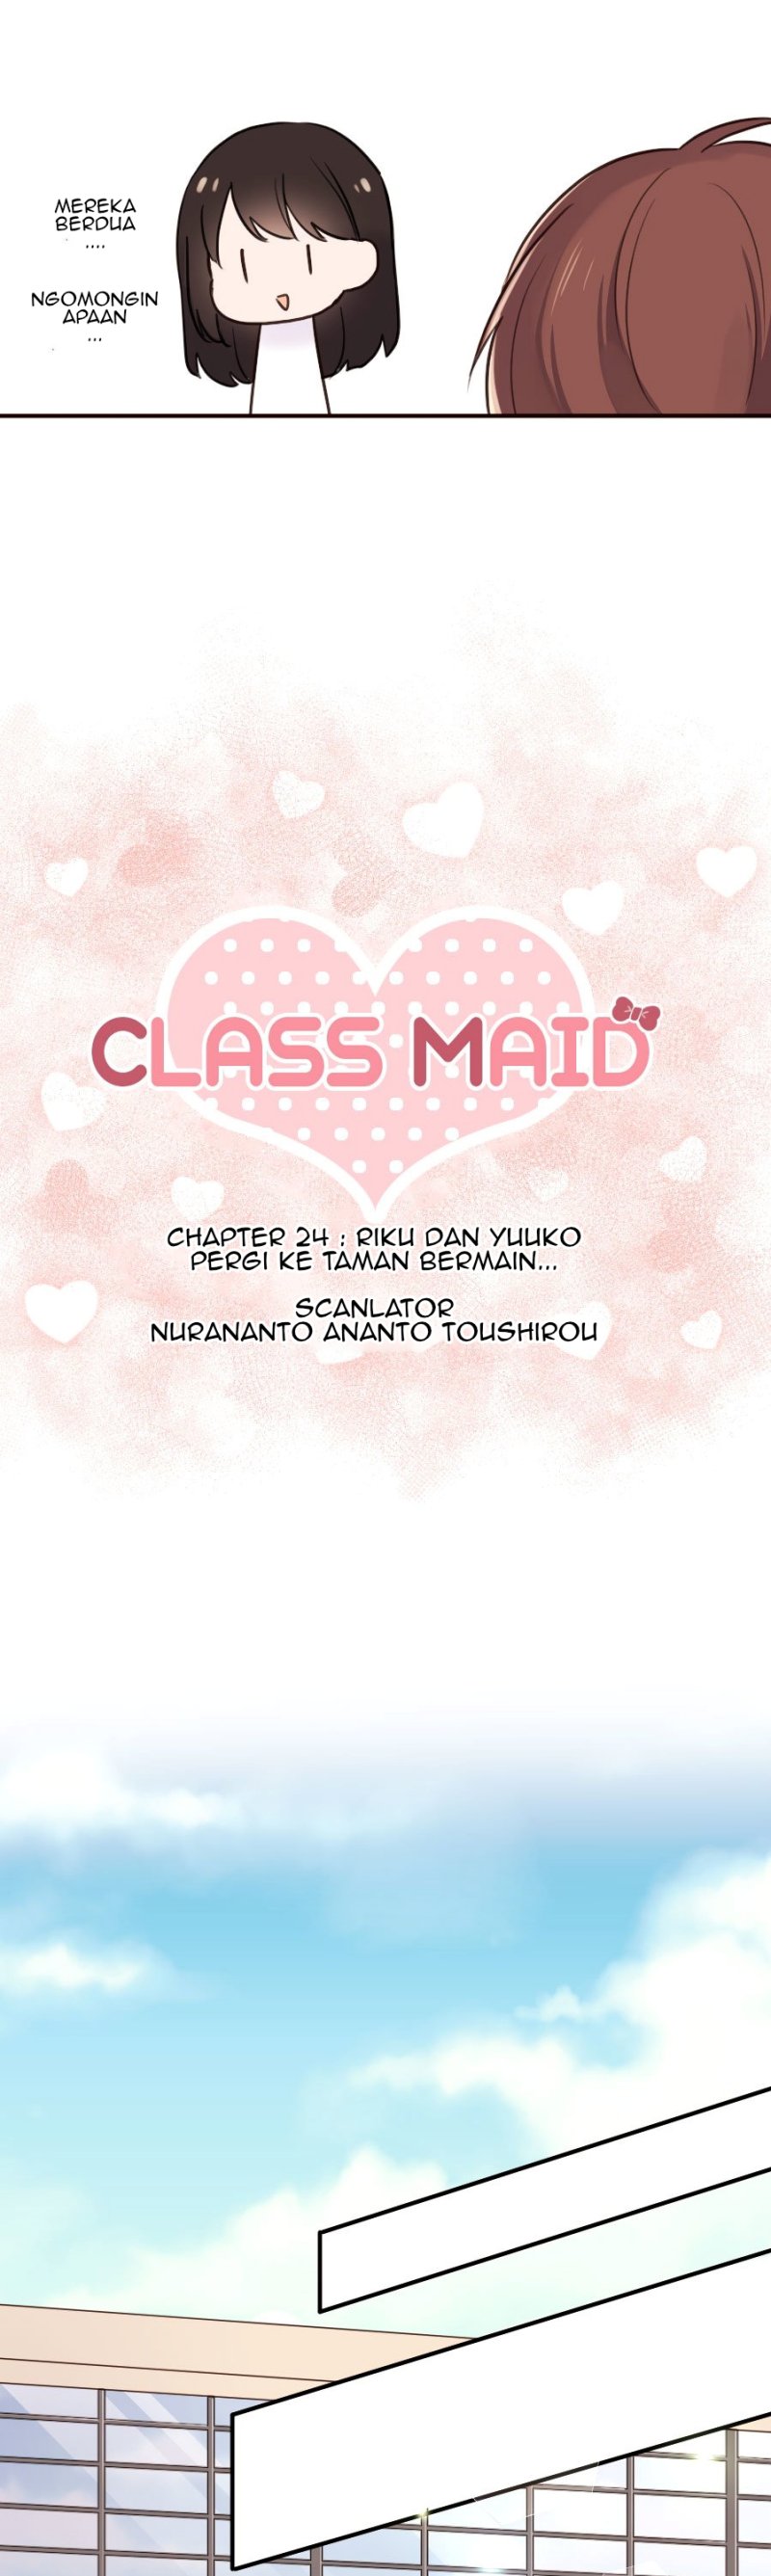 Class Maid (shimamura) Chapter 24